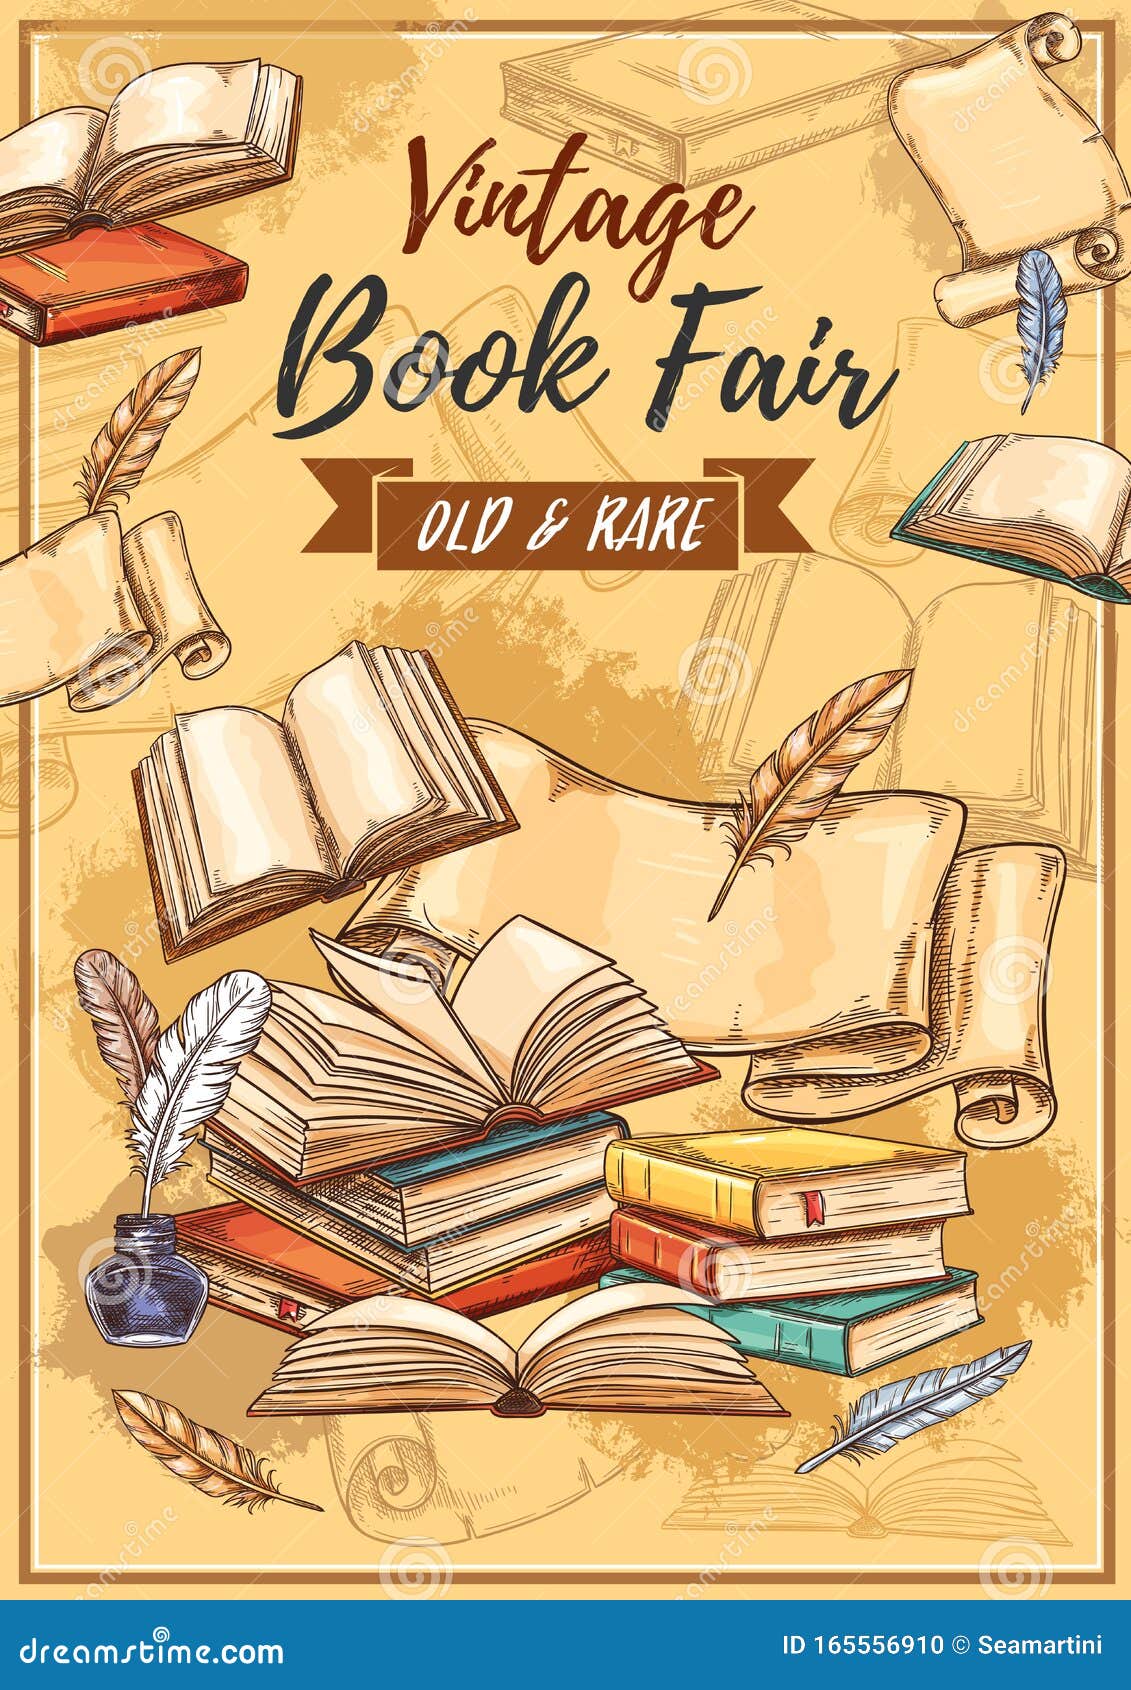 Baltimore Book Fair – Drawing Baltimore